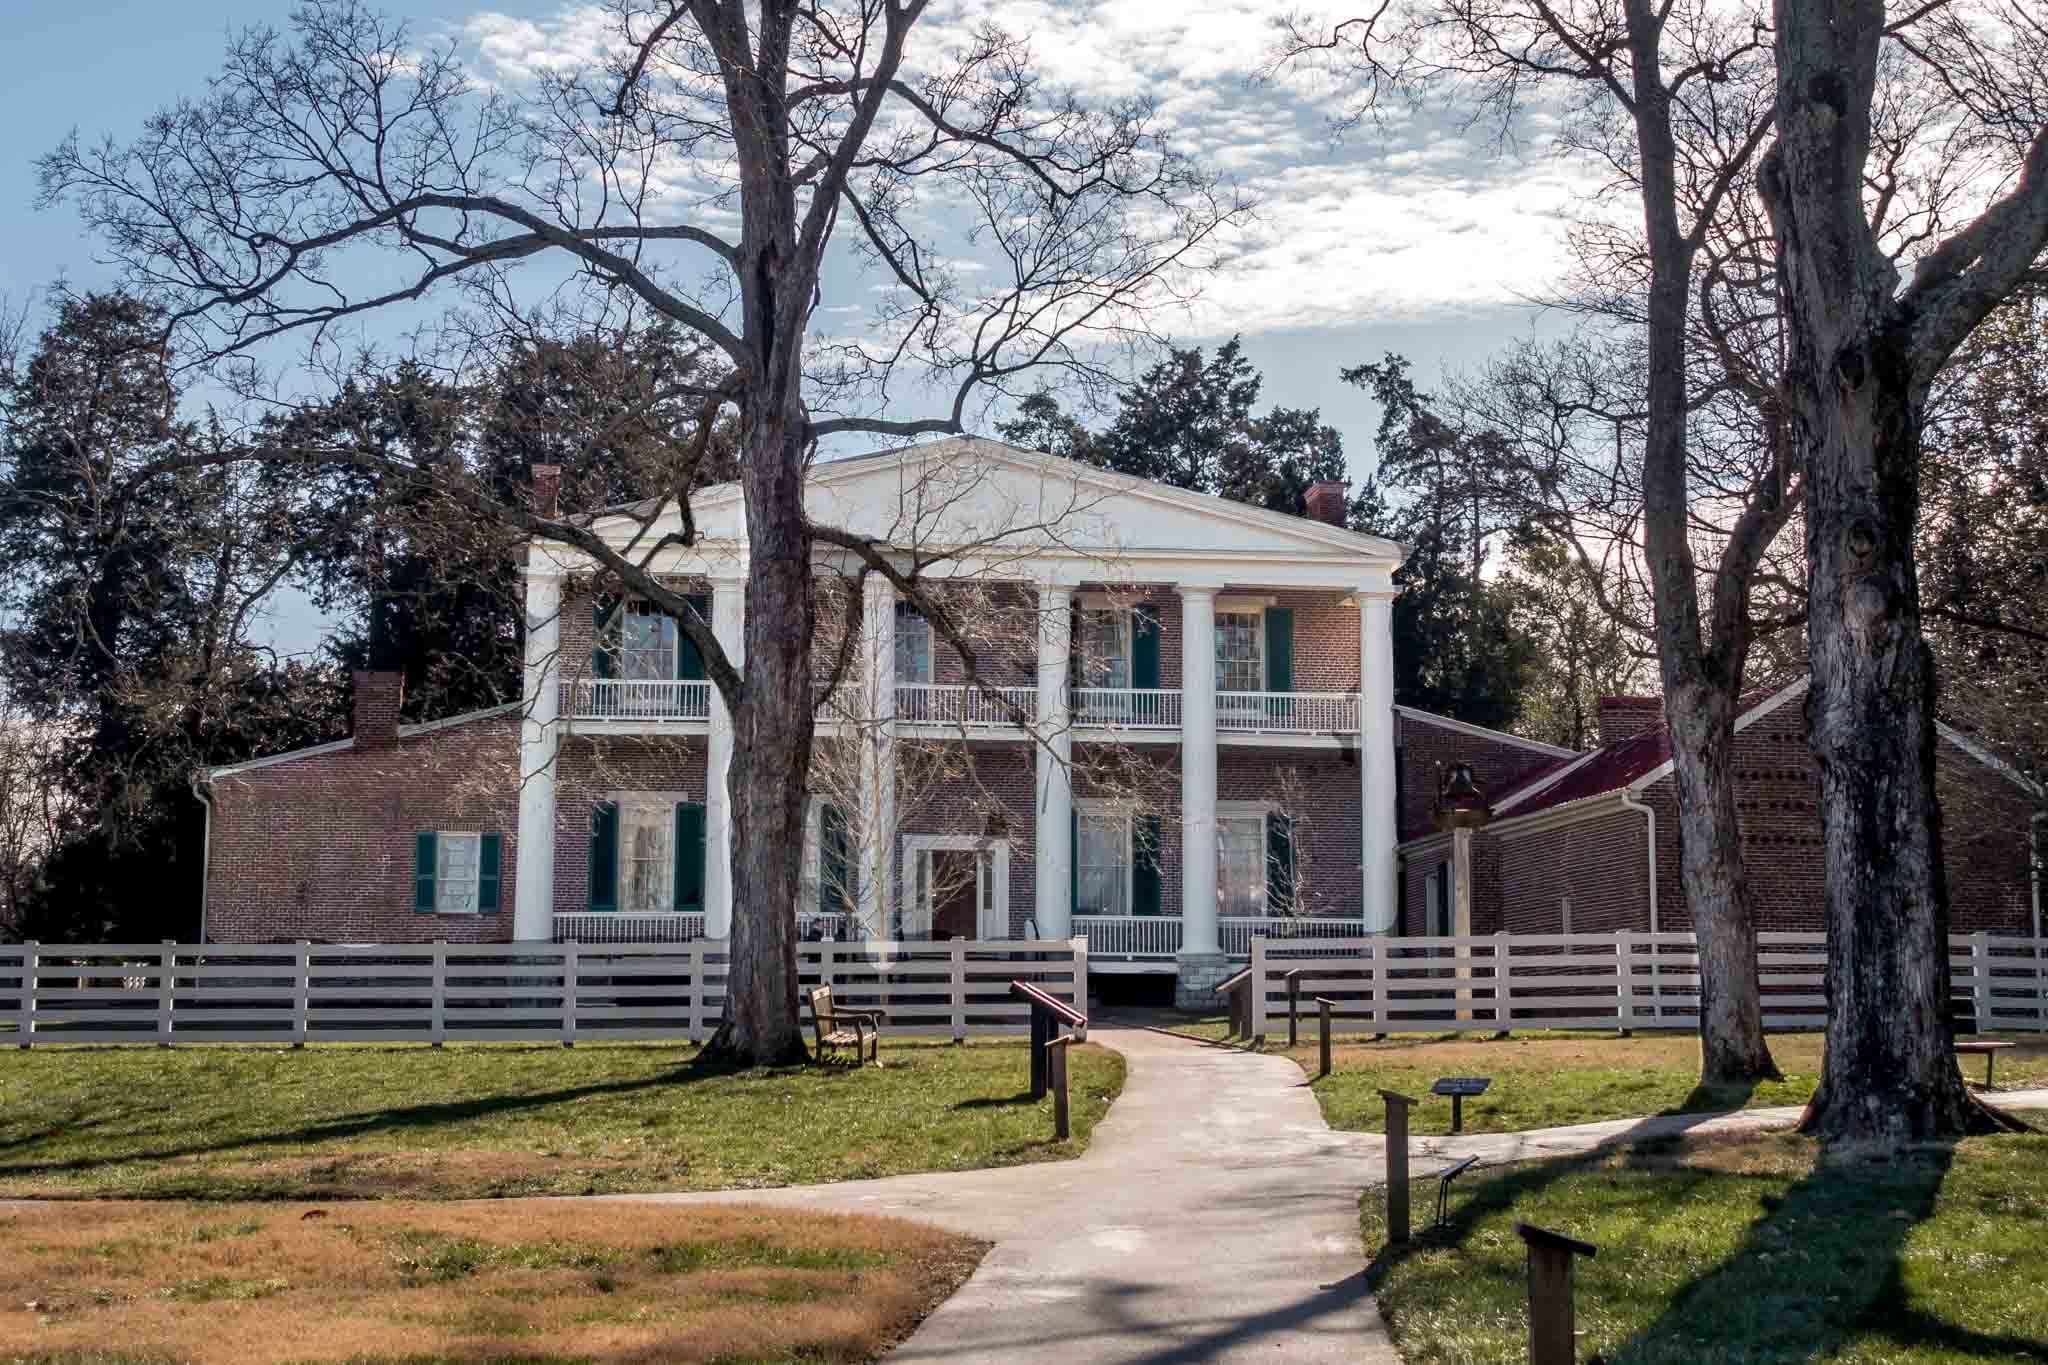 Exterior of Andrew Jackson's Hermitage mansion